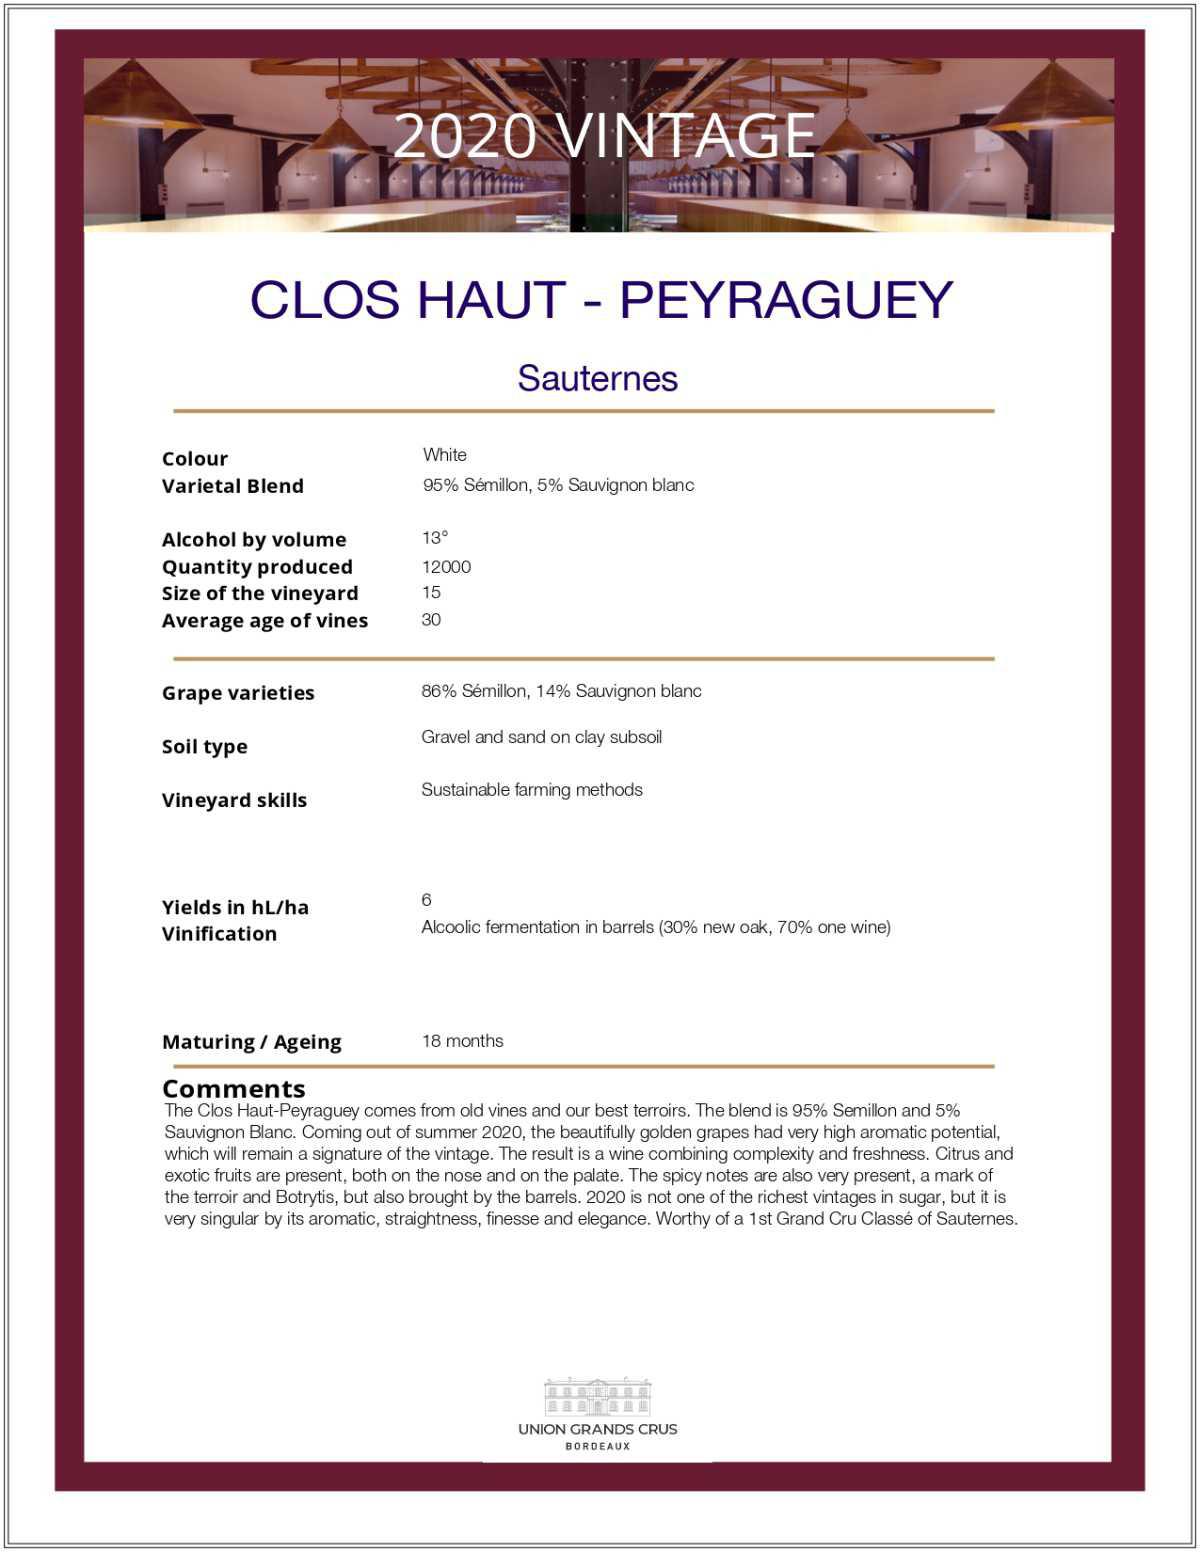 Clos Haut - Peyraguey